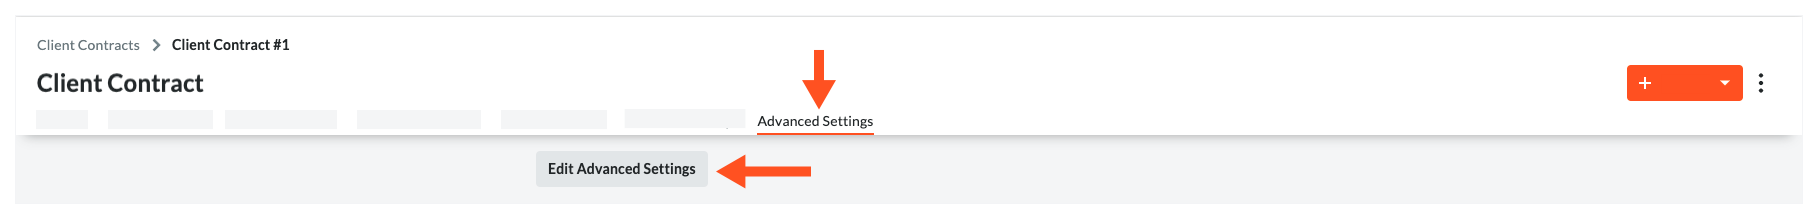 edit-advanced-settings-button.png